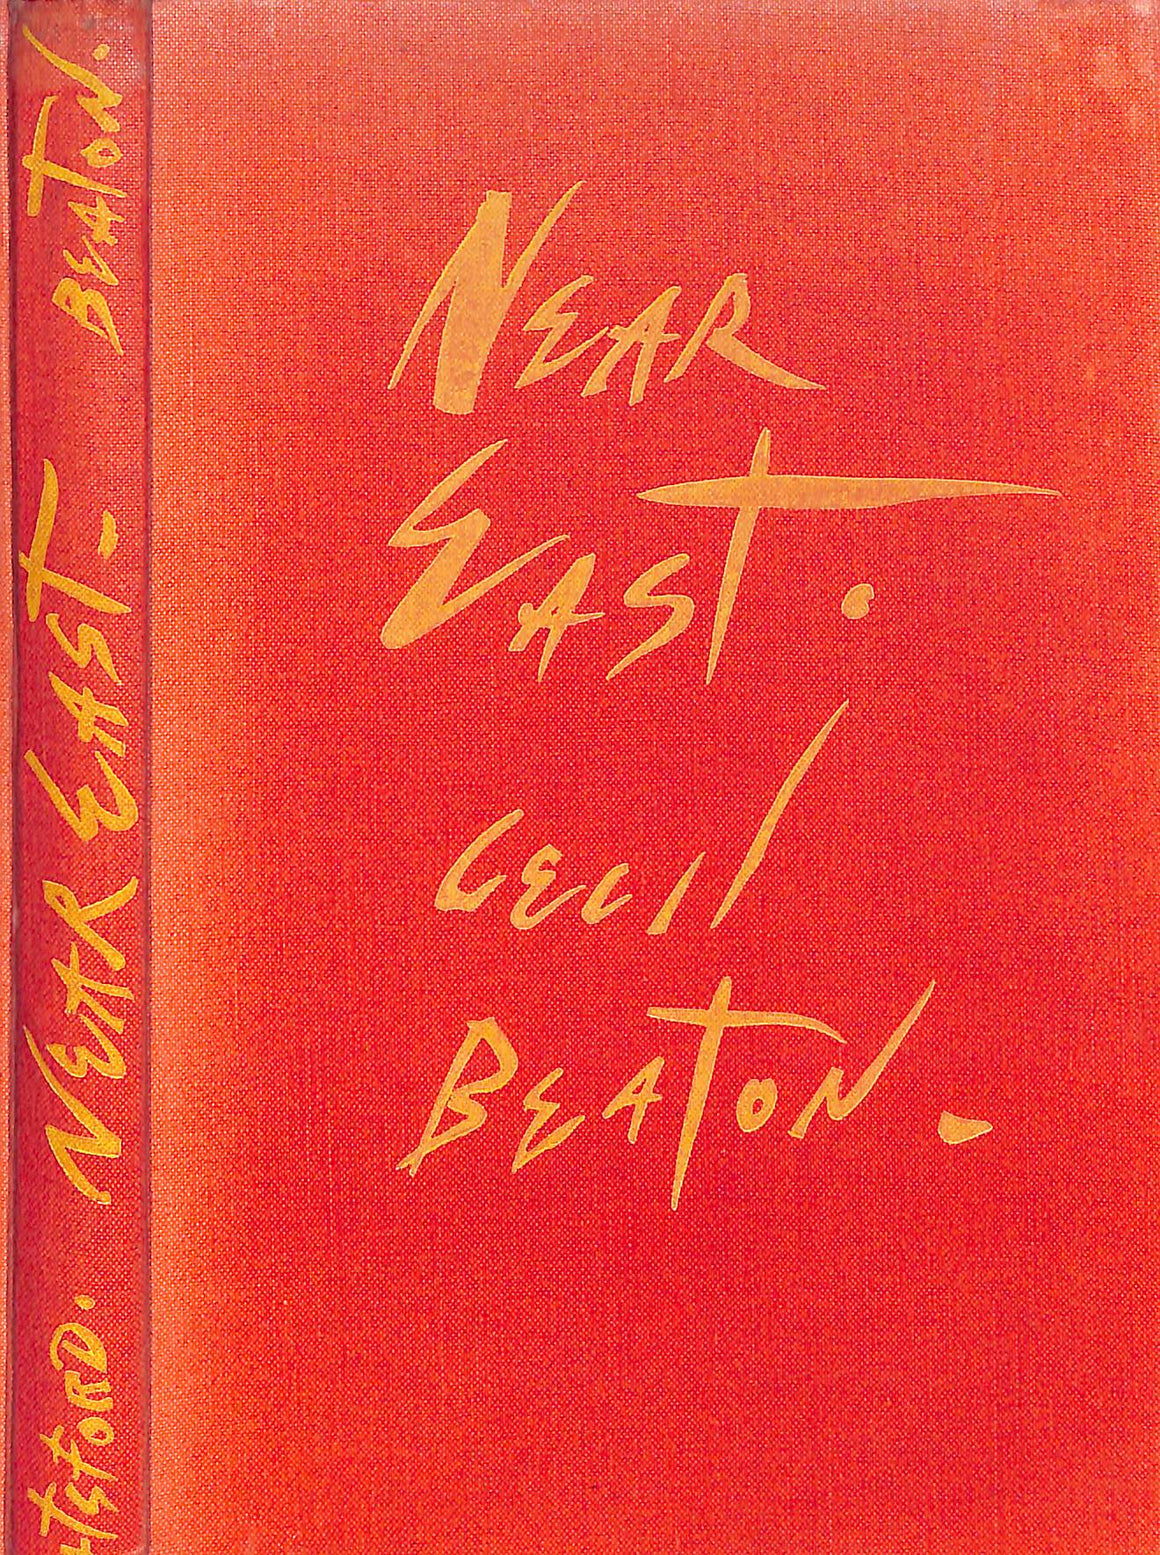 "Near East" 1943 BEATON, Cecil (SIGNED)